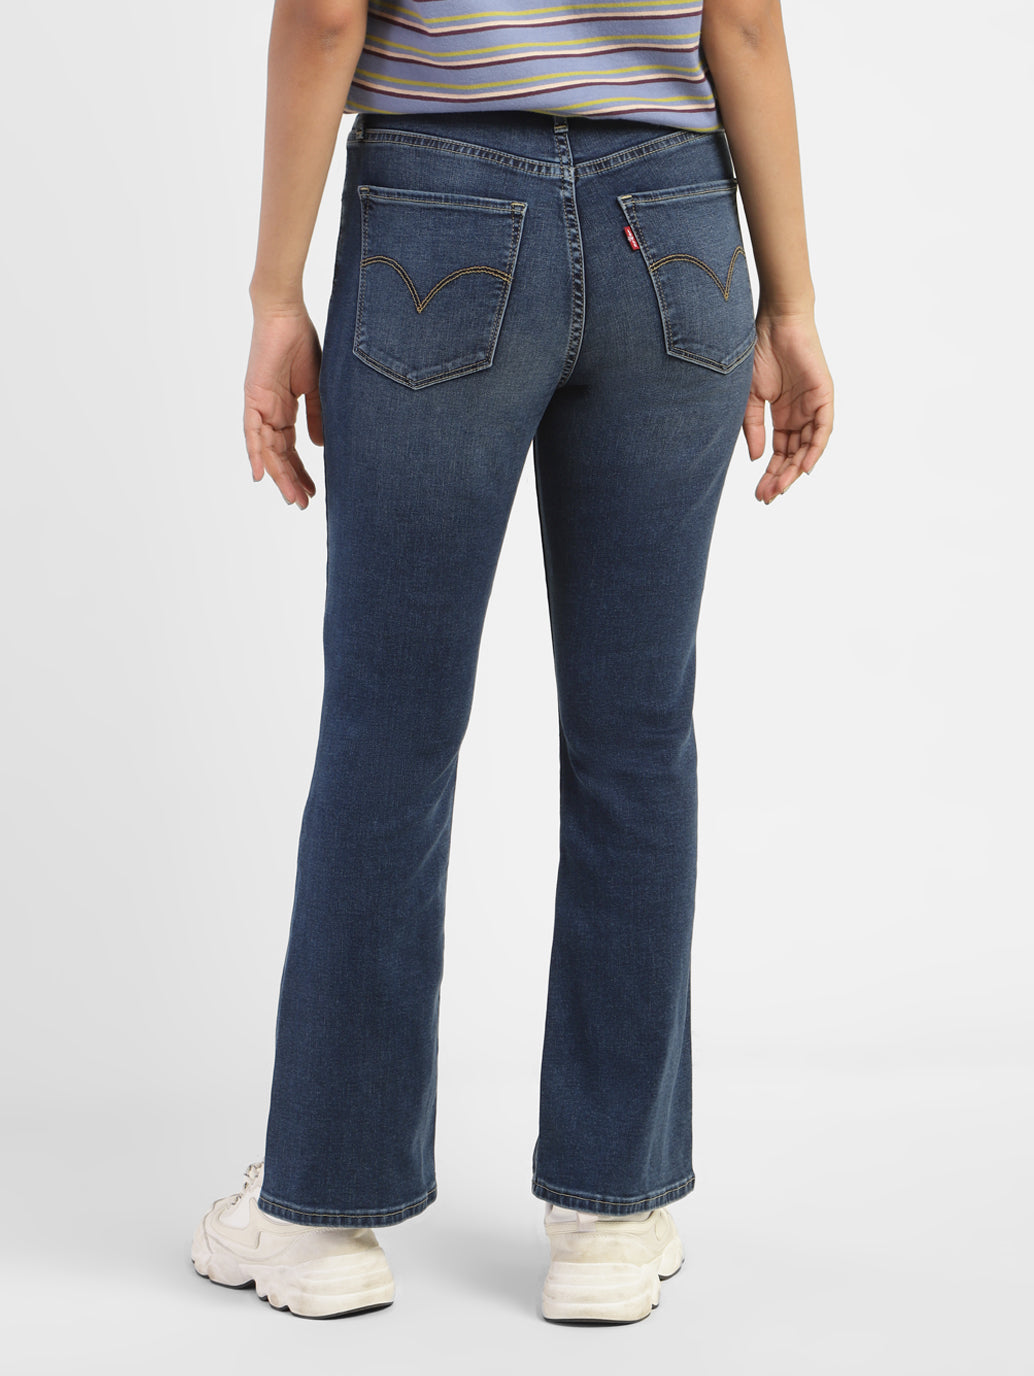 Women's 725 Bootcut Jeans